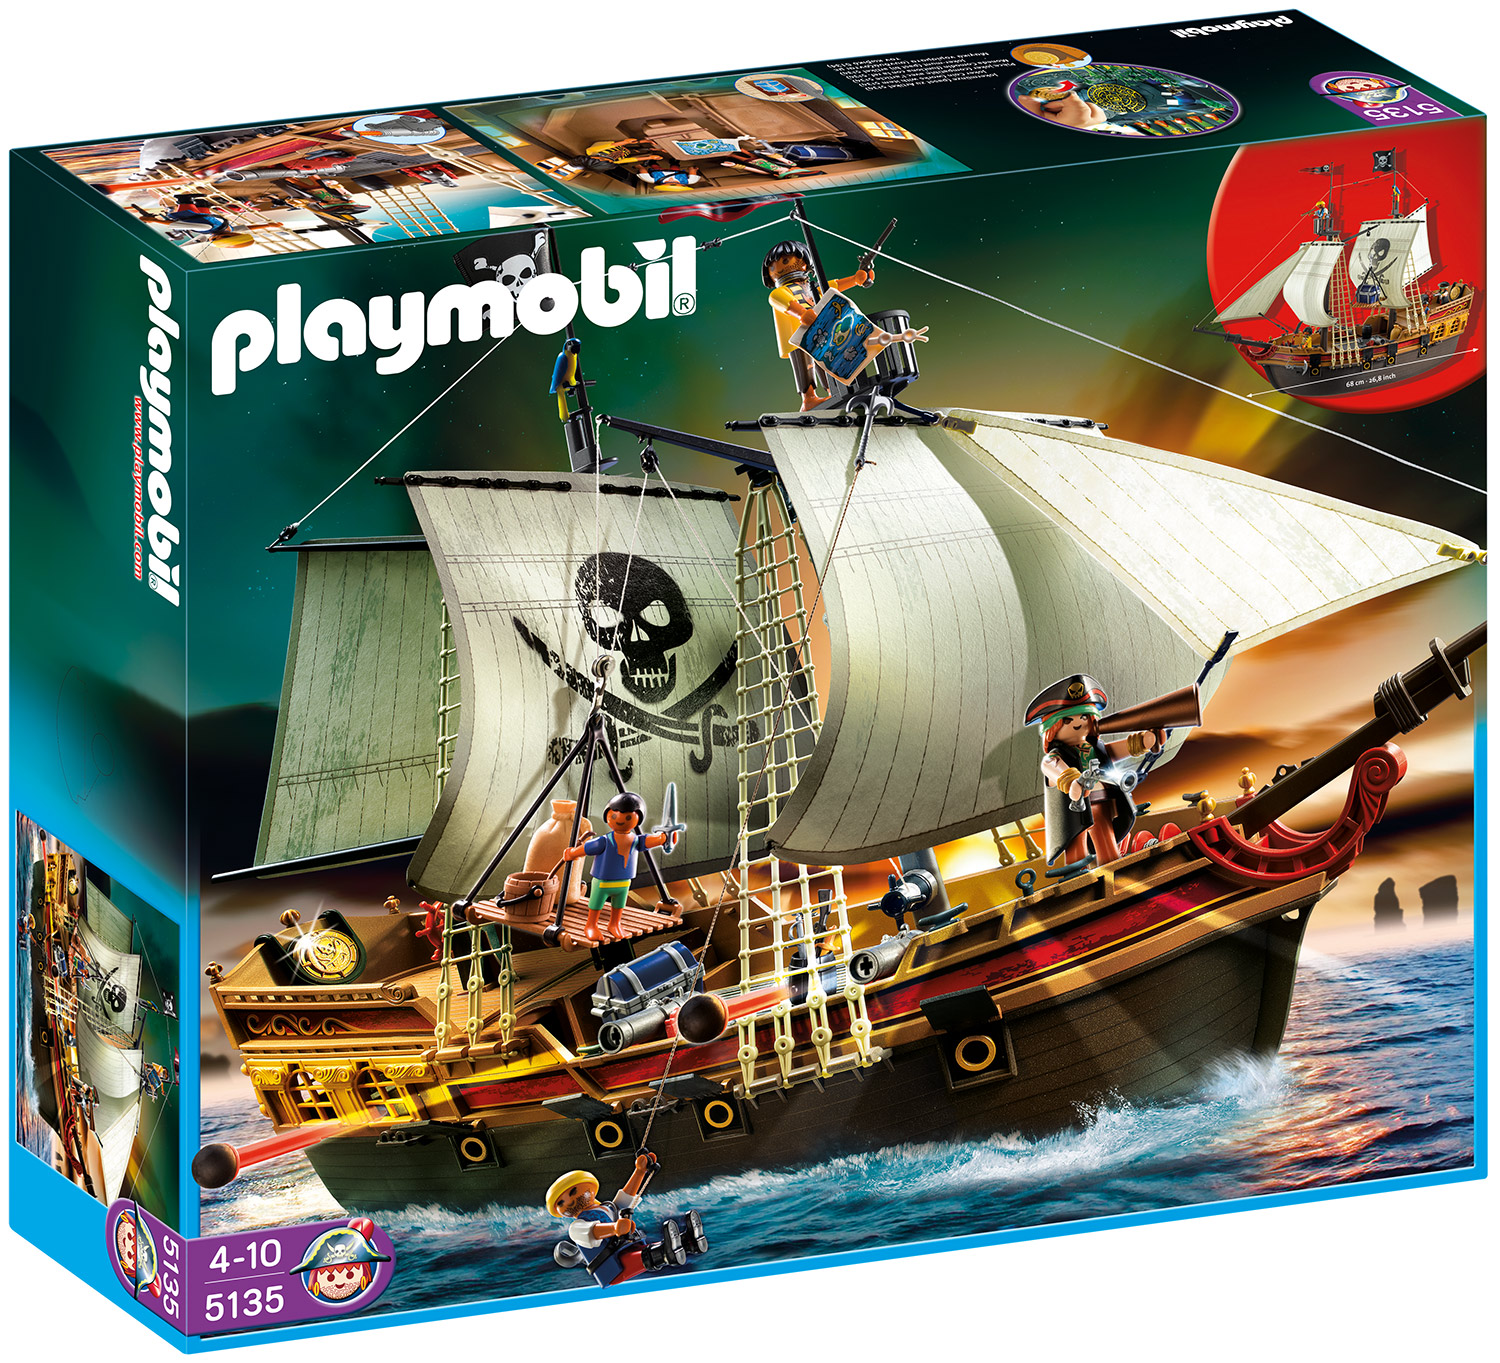 Das Playmobil Piraten-Beuteschiff ist unterwegs! - Family Blog